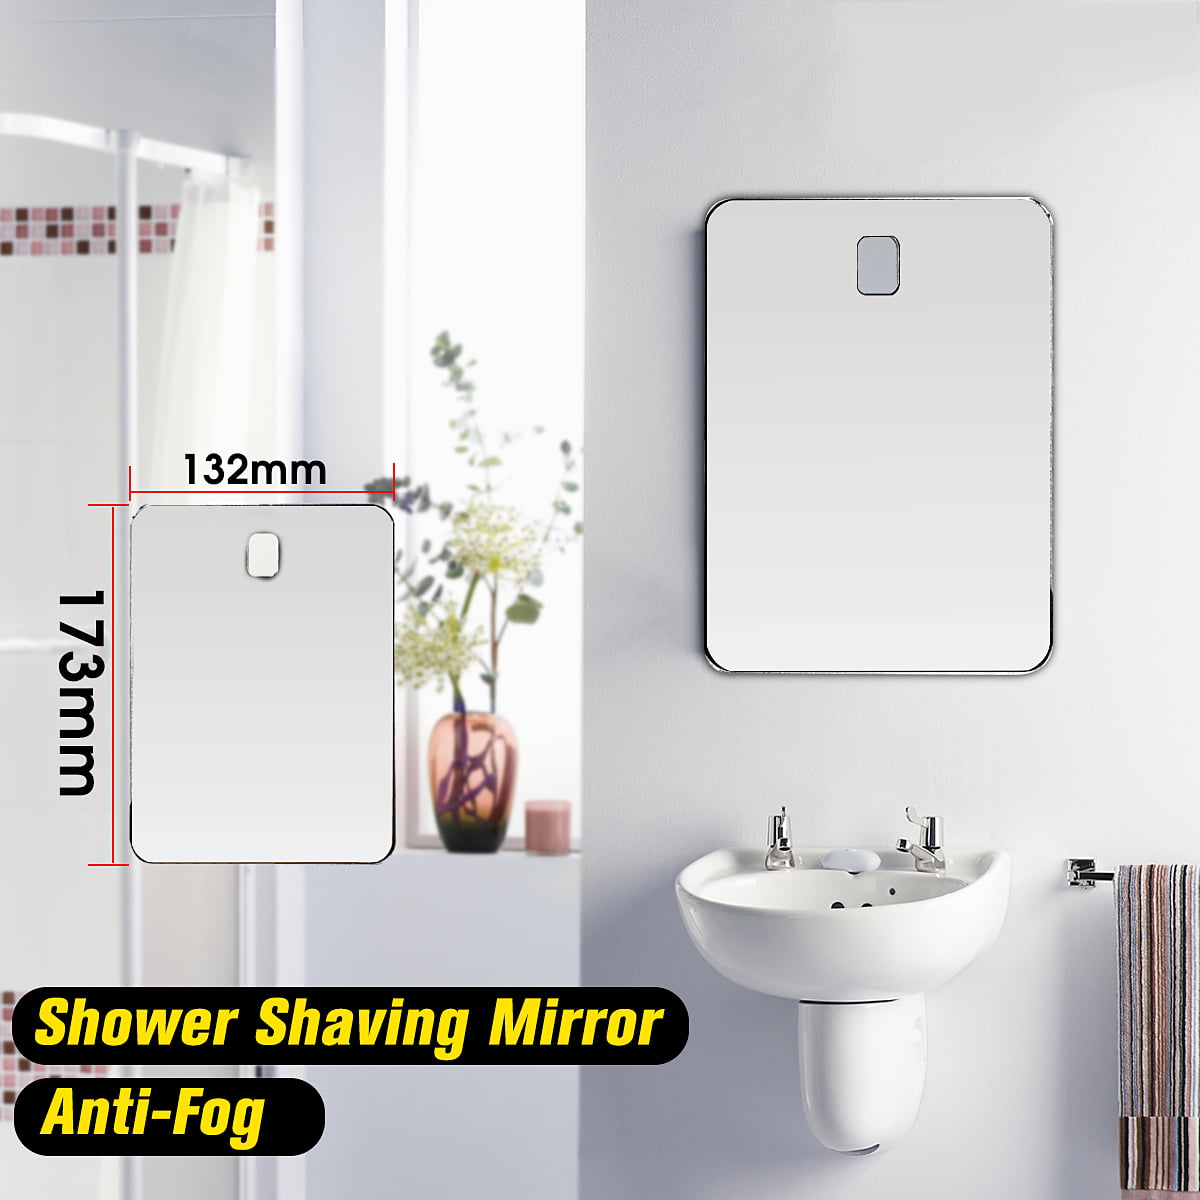 Home Pro Fogless Shower Shaving Bath Bathroom Makeup Mirror Wall Anti Fog Mirror Home And Garden 